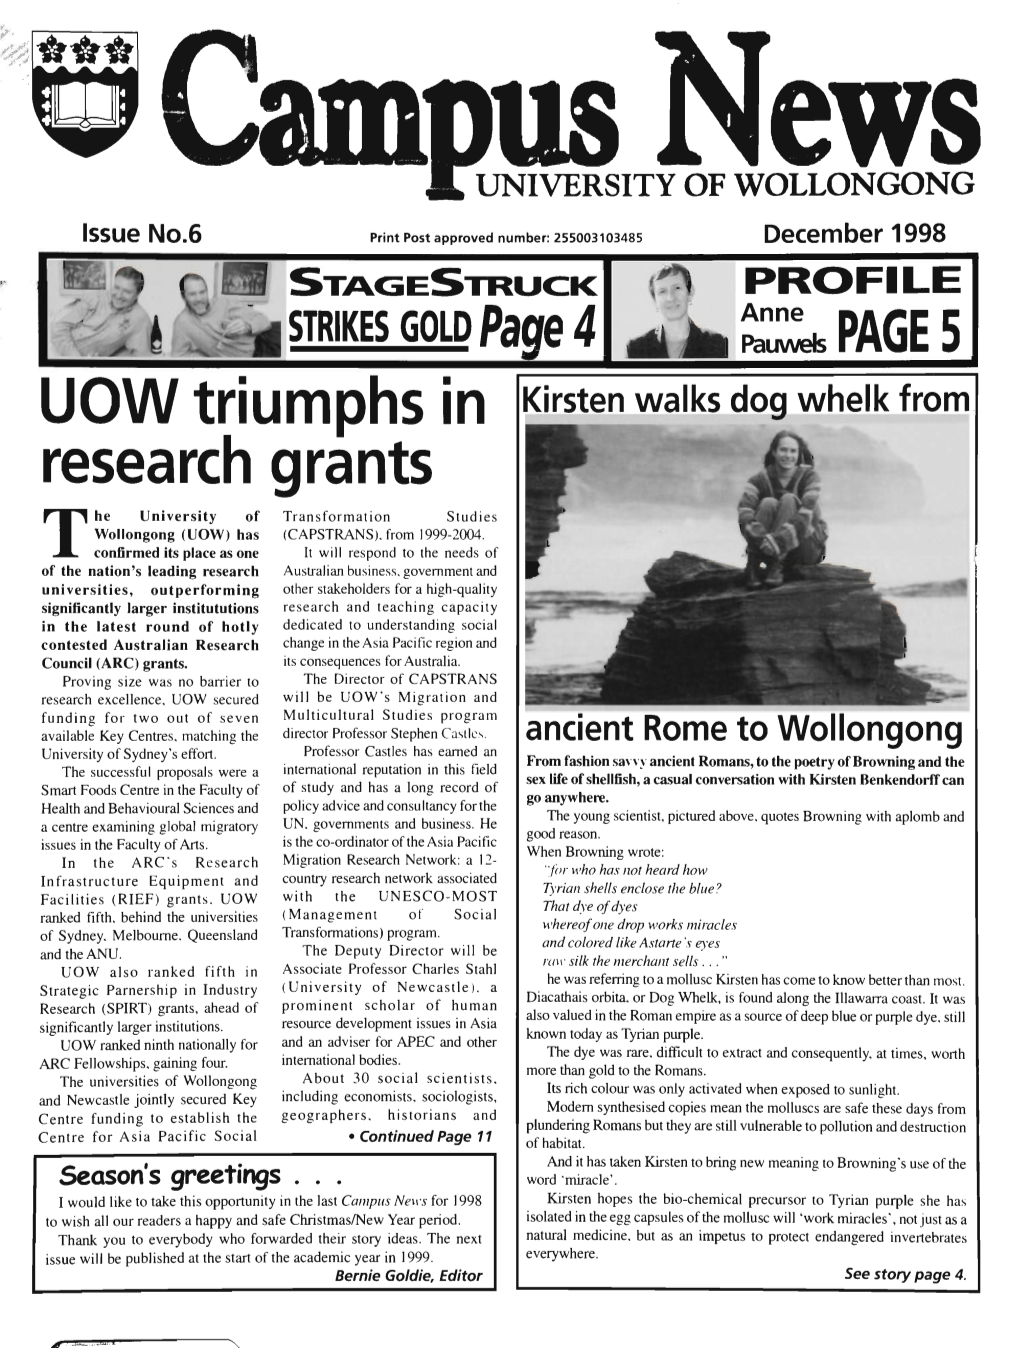 University of Wollongong Campus News December 1998